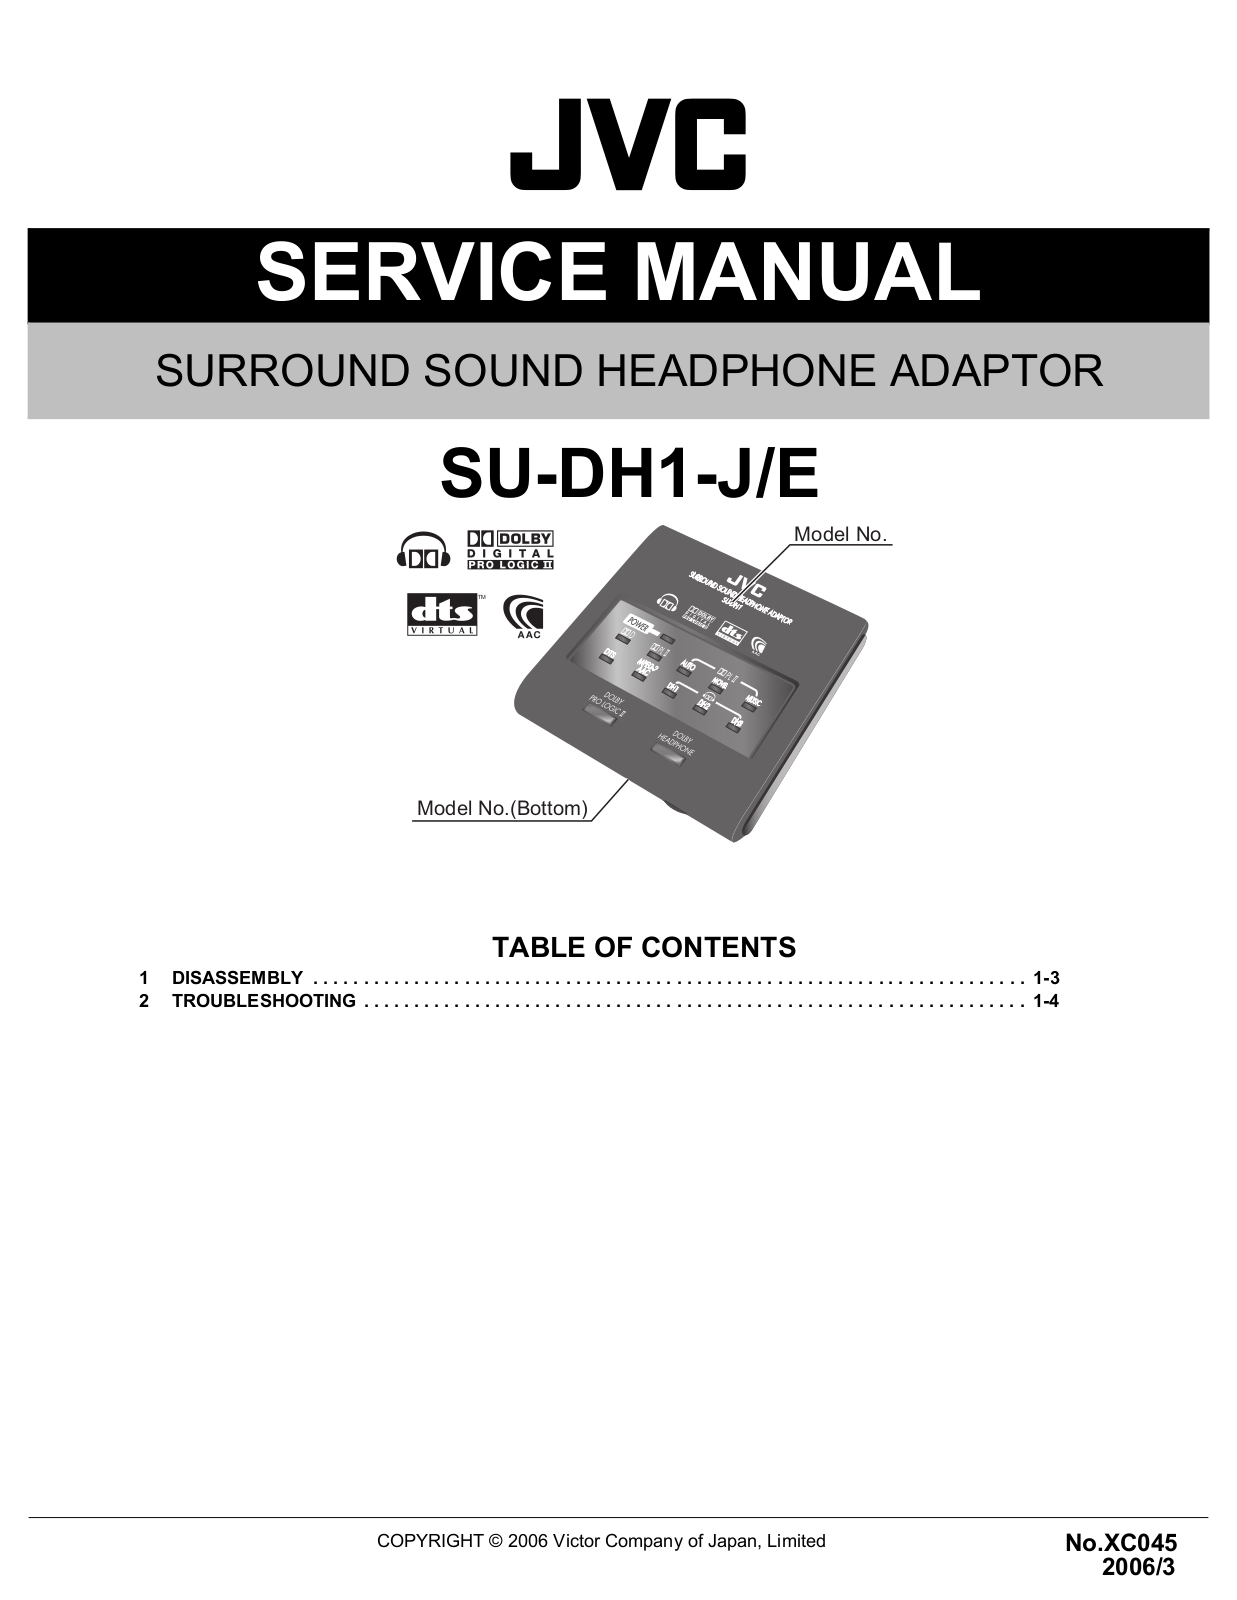 Jvc SU-DH1-JE Service Manual